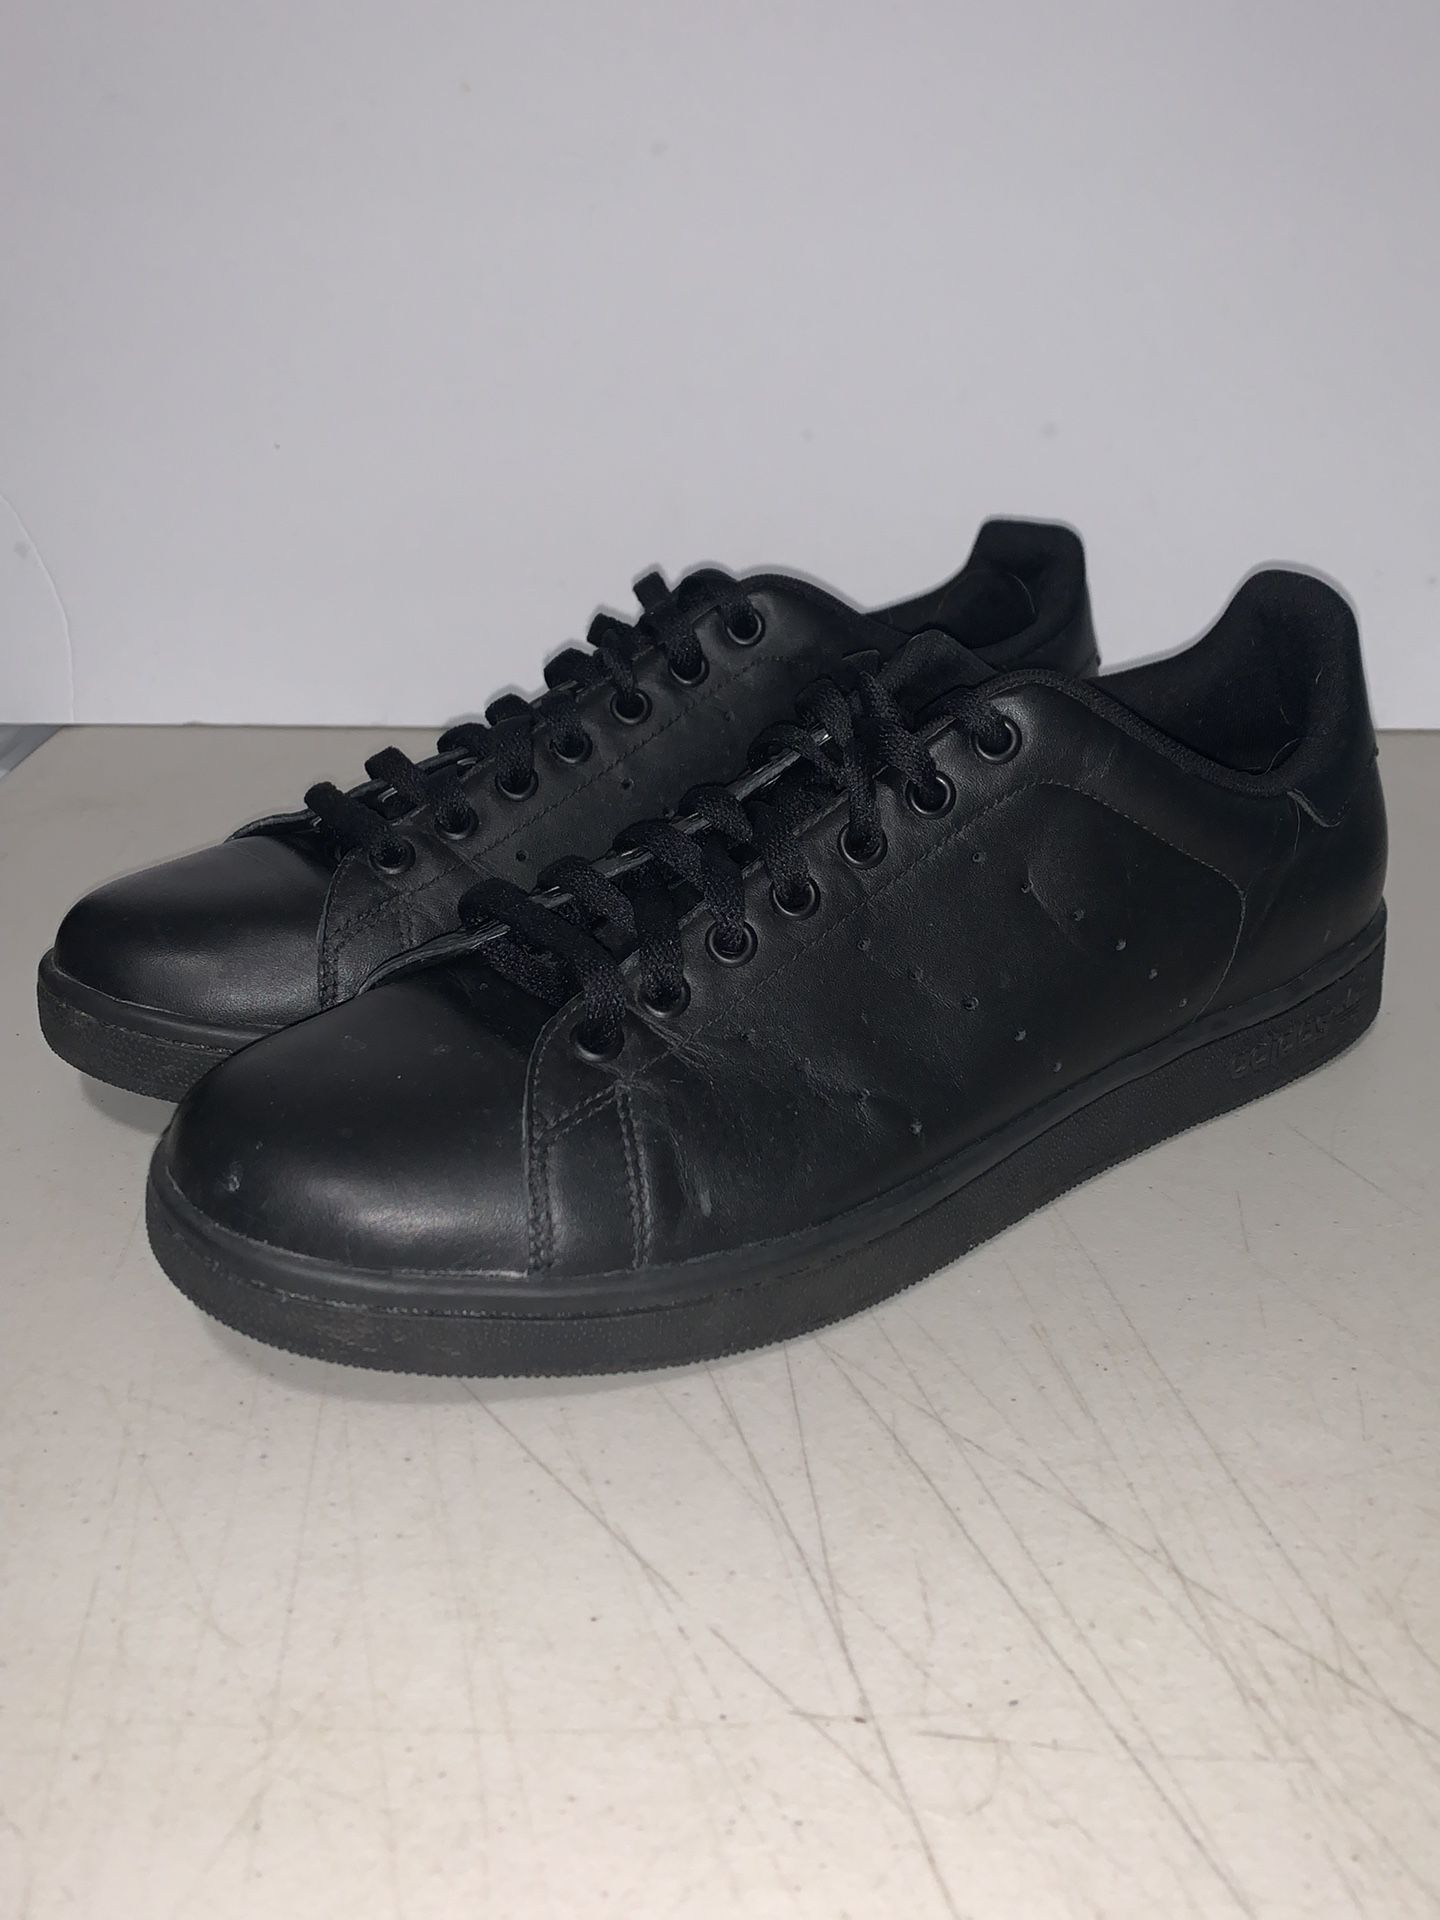 Adidas Stan Smith 2 Triple Black Mens Size 12 Retro OG Sneakers G17076